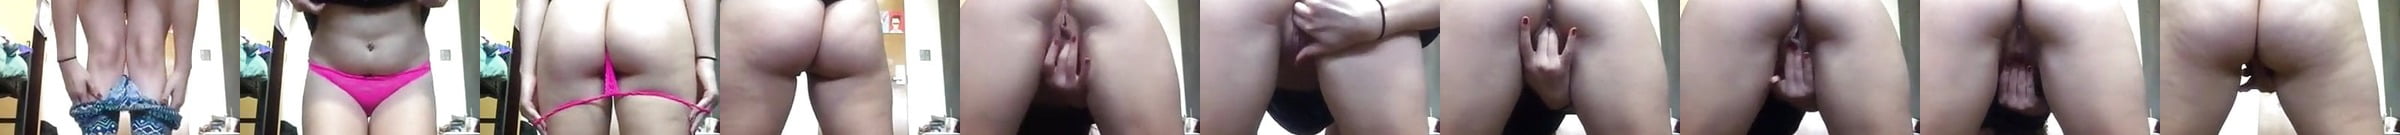 Komal Jha First Time Full Nude Washrom Video 2017 Porn 55 Xhamster